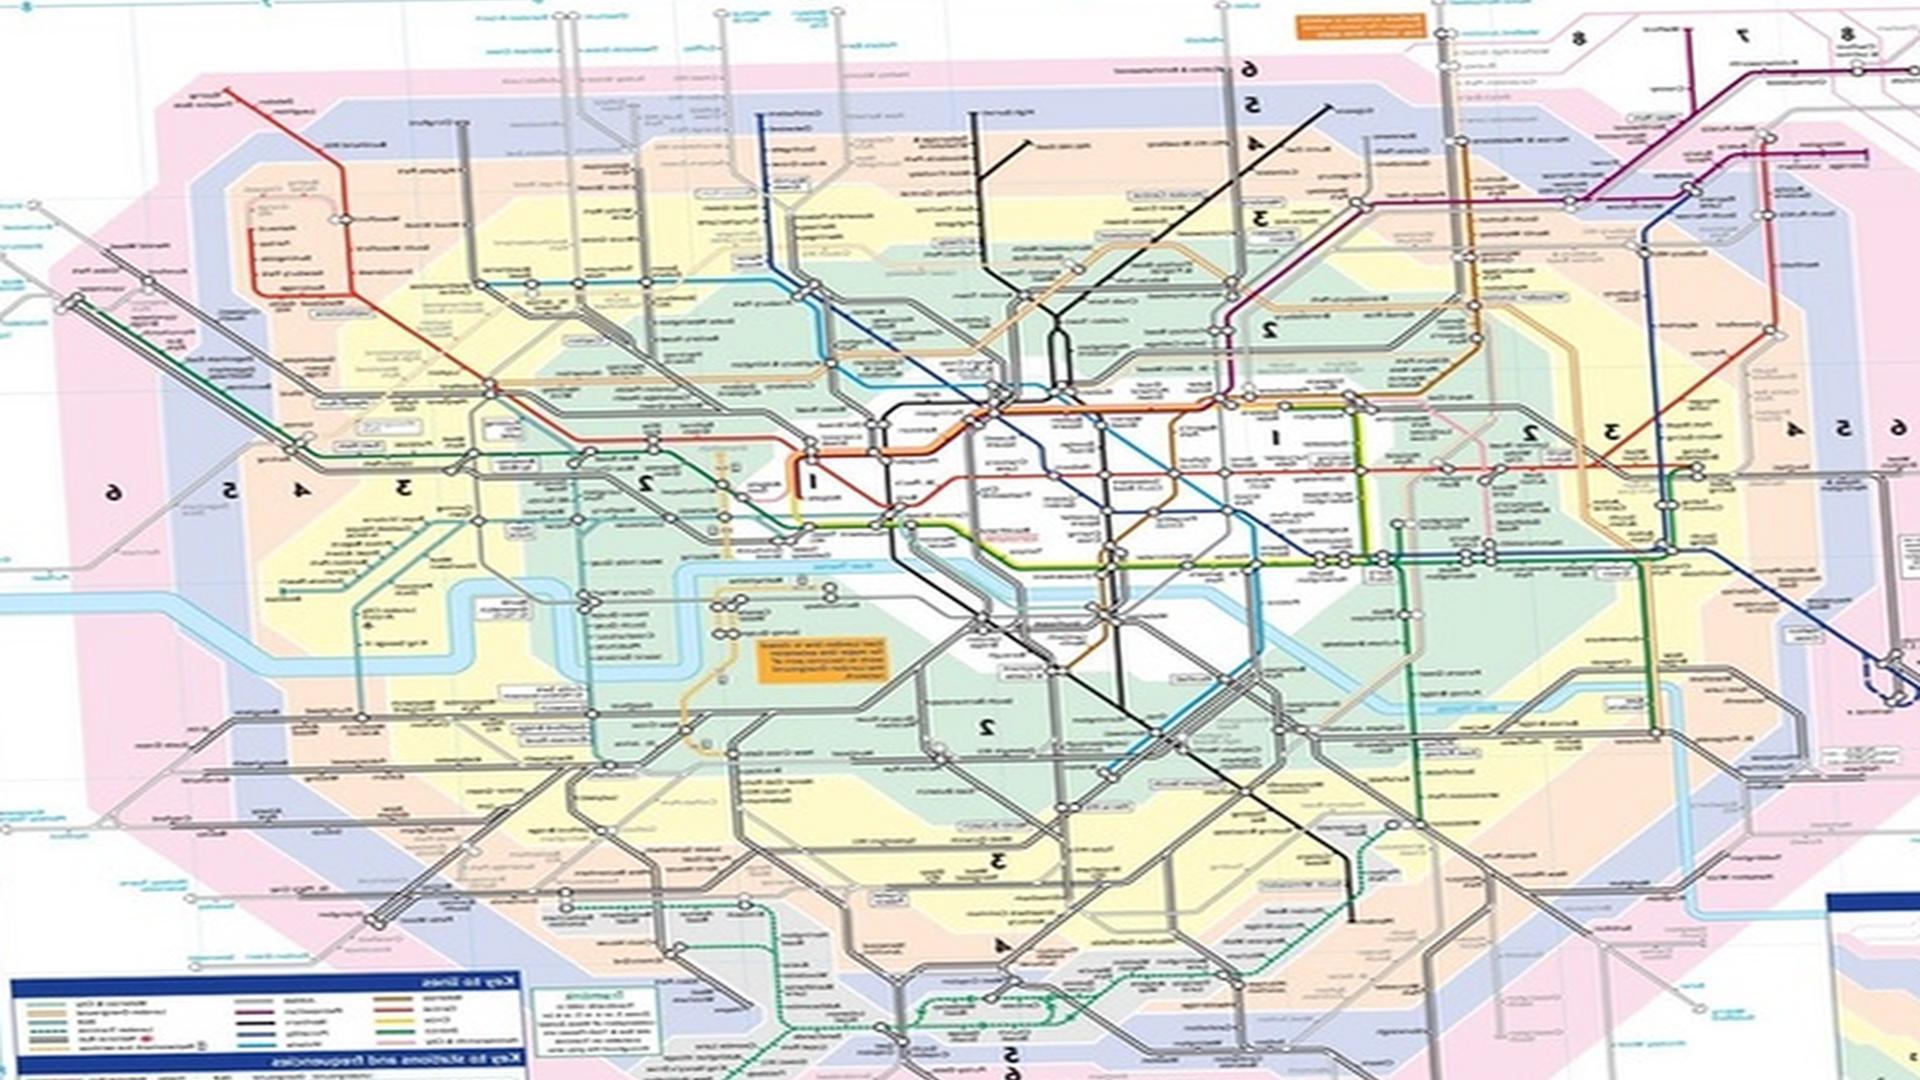 London Transport Zones